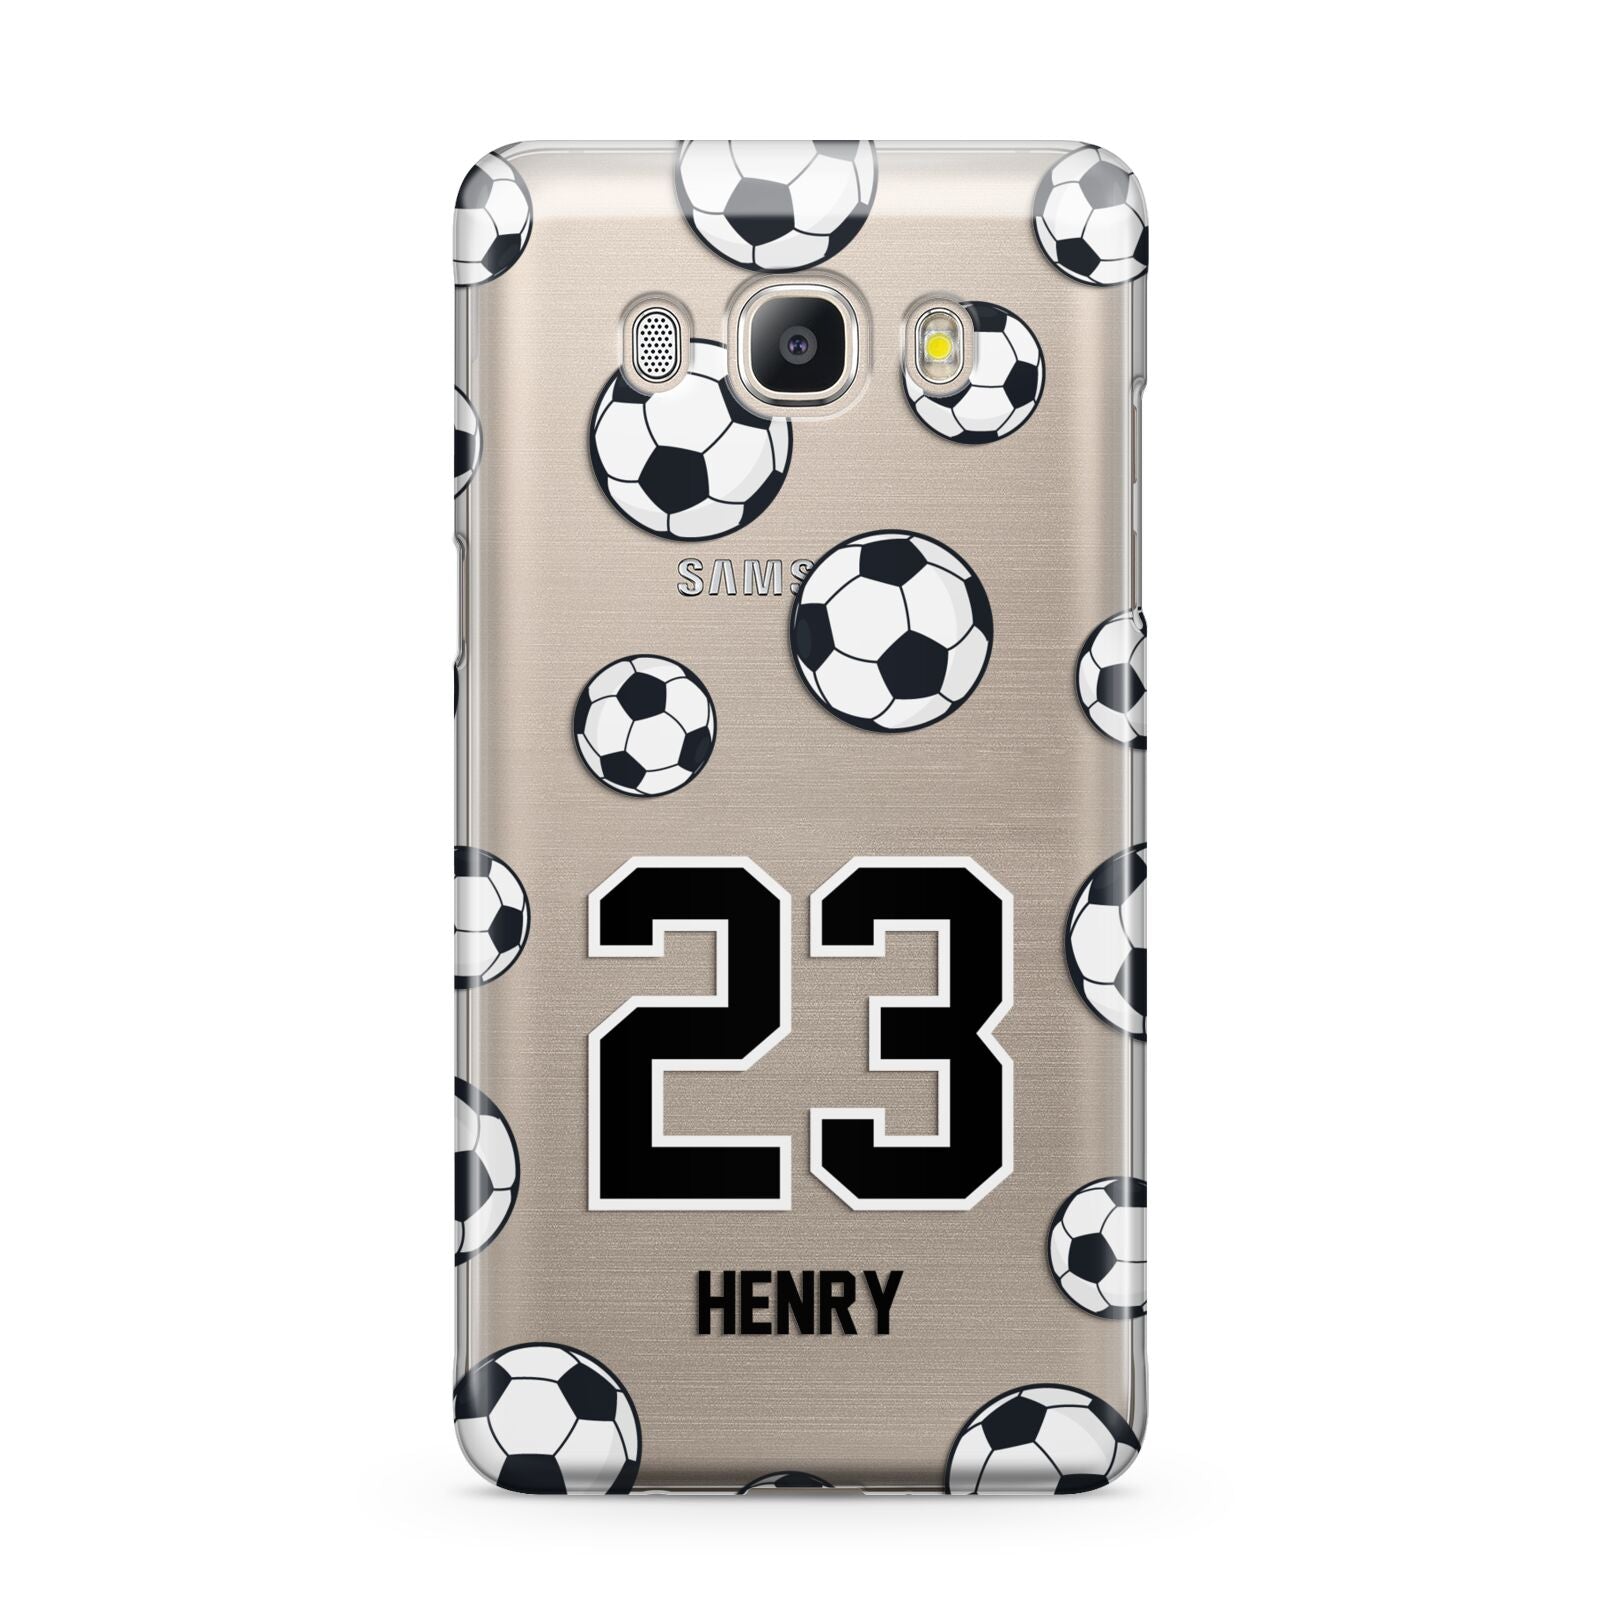 Personalised Football Samsung Galaxy J5 2016 Case